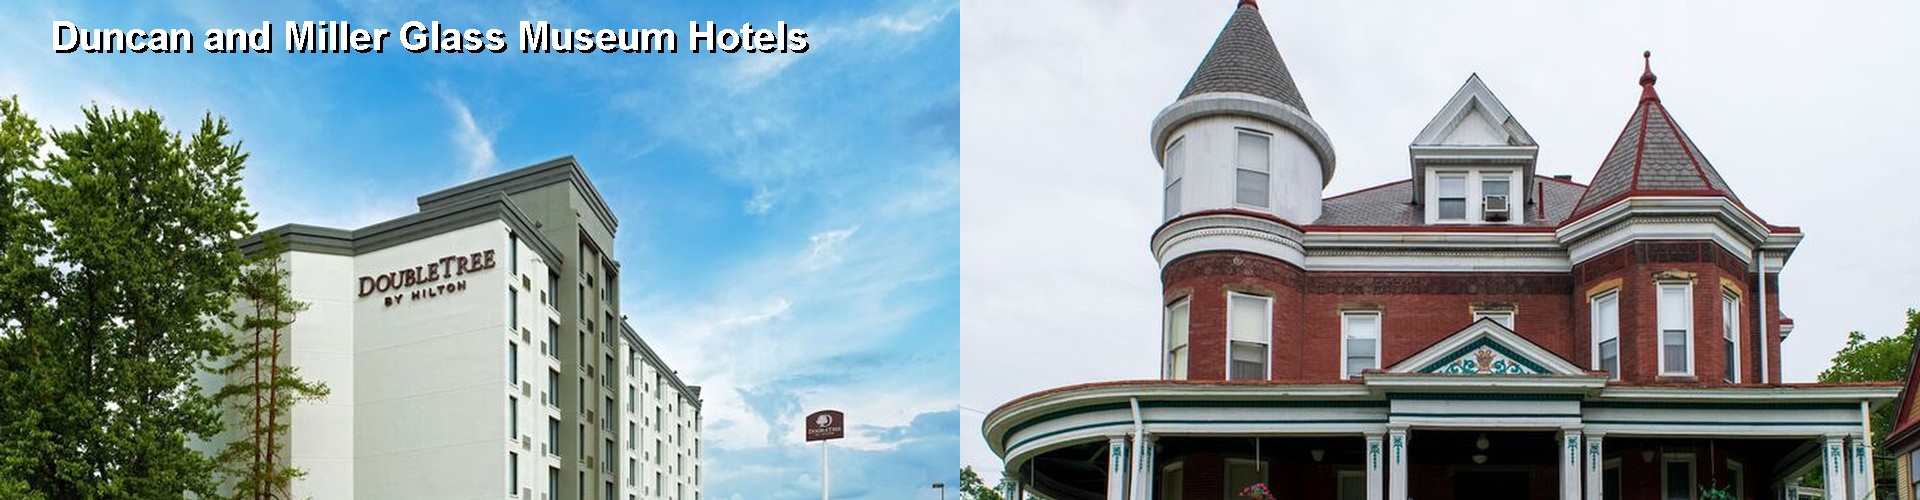 5 Best Hotels near Duncan and Miller Glass Museum